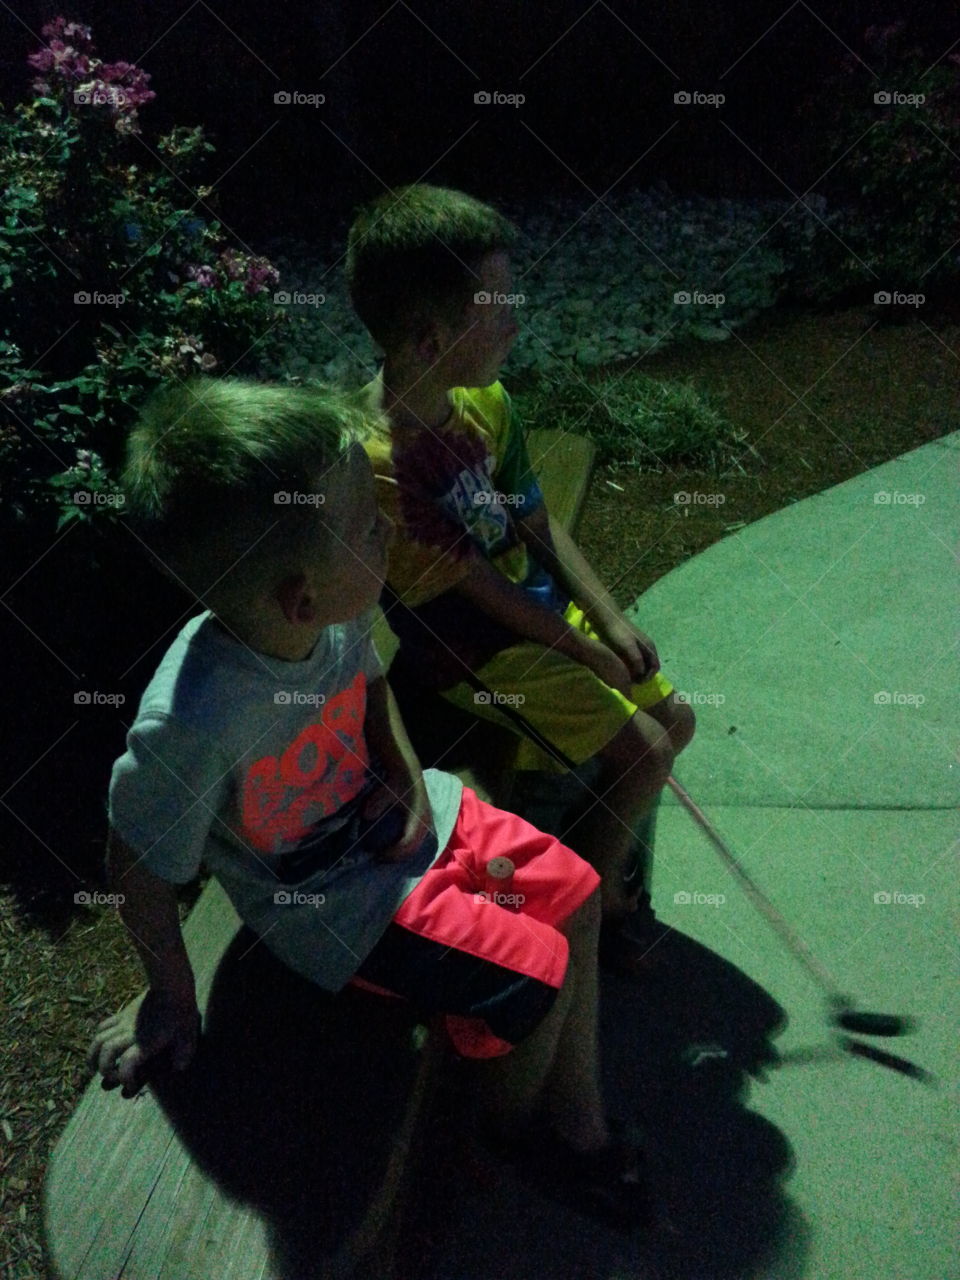 Adventure Golf at night